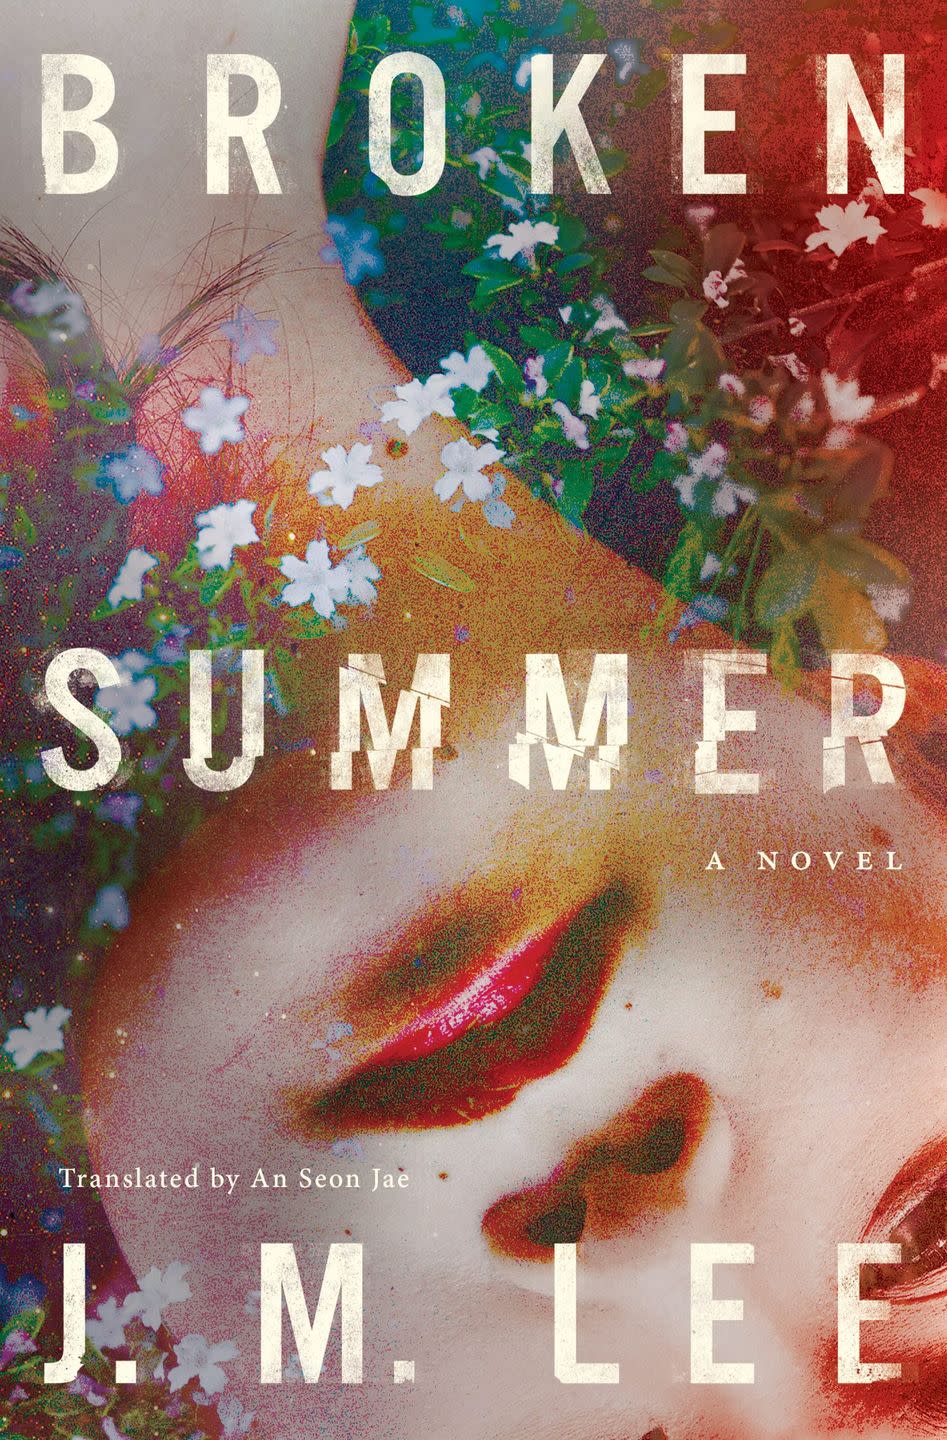 1) 'Broken Summer' by J.M. Lee